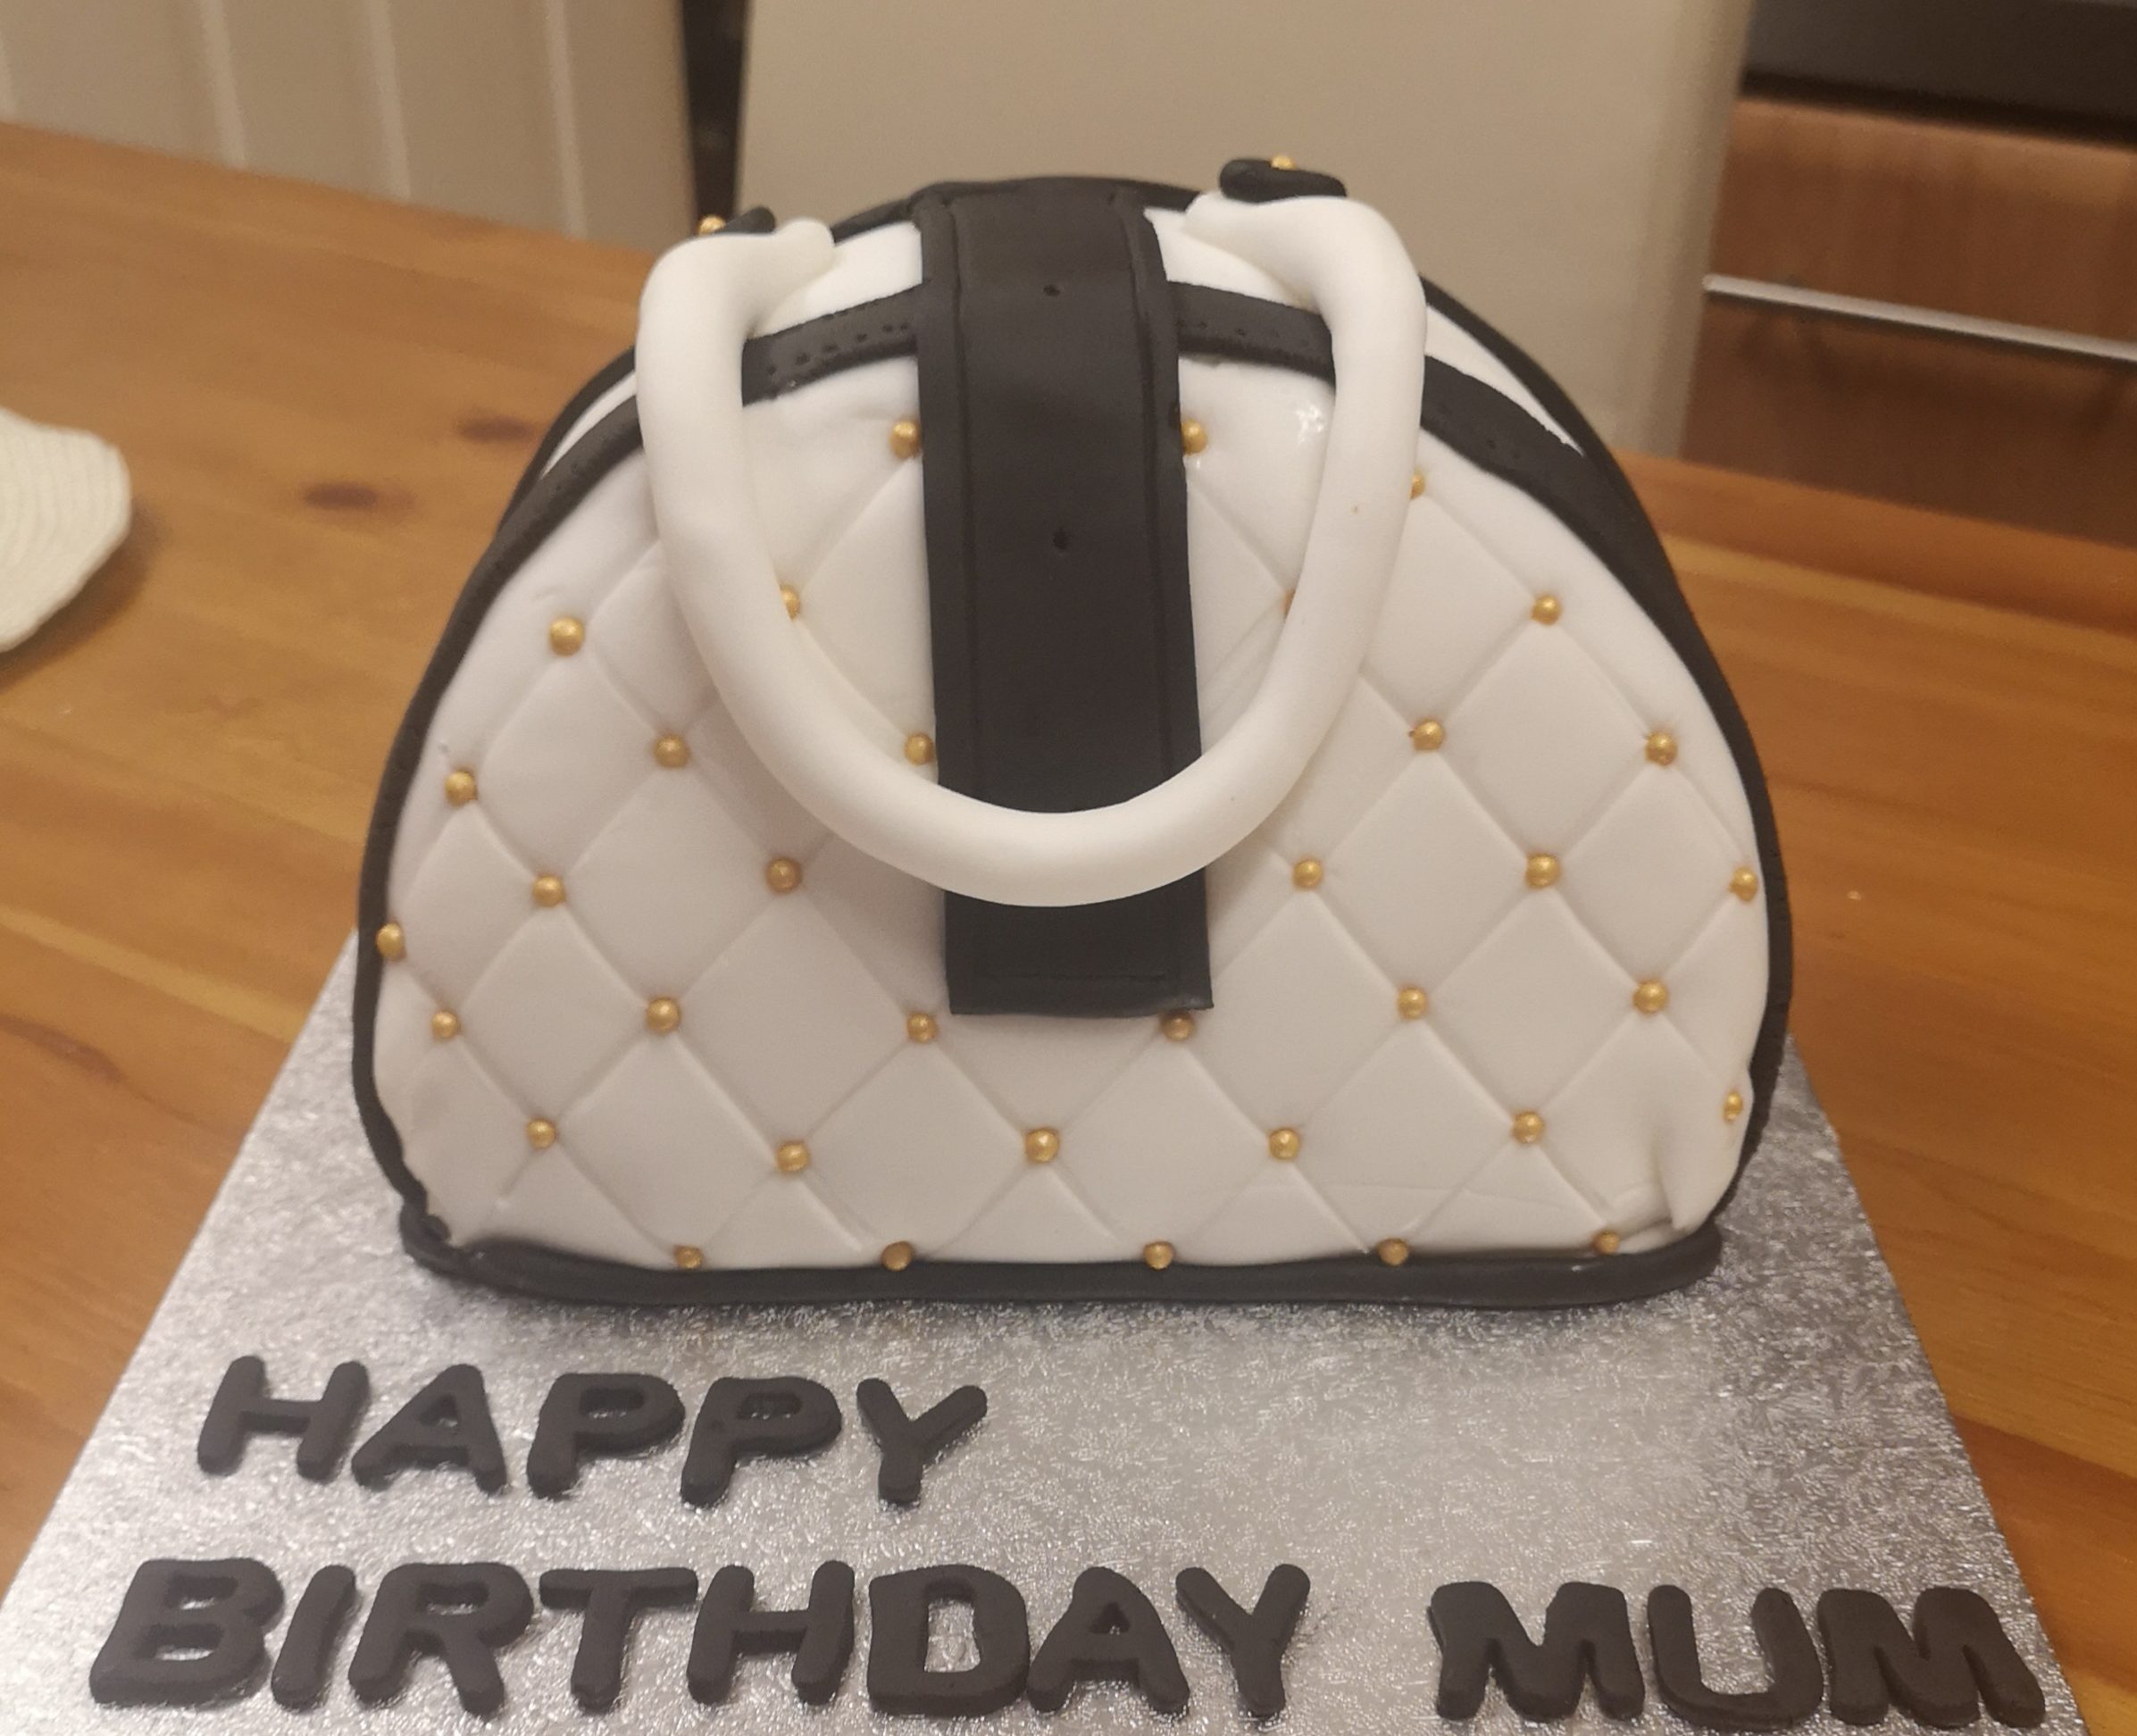 Gucci bag Cake design - MrCake